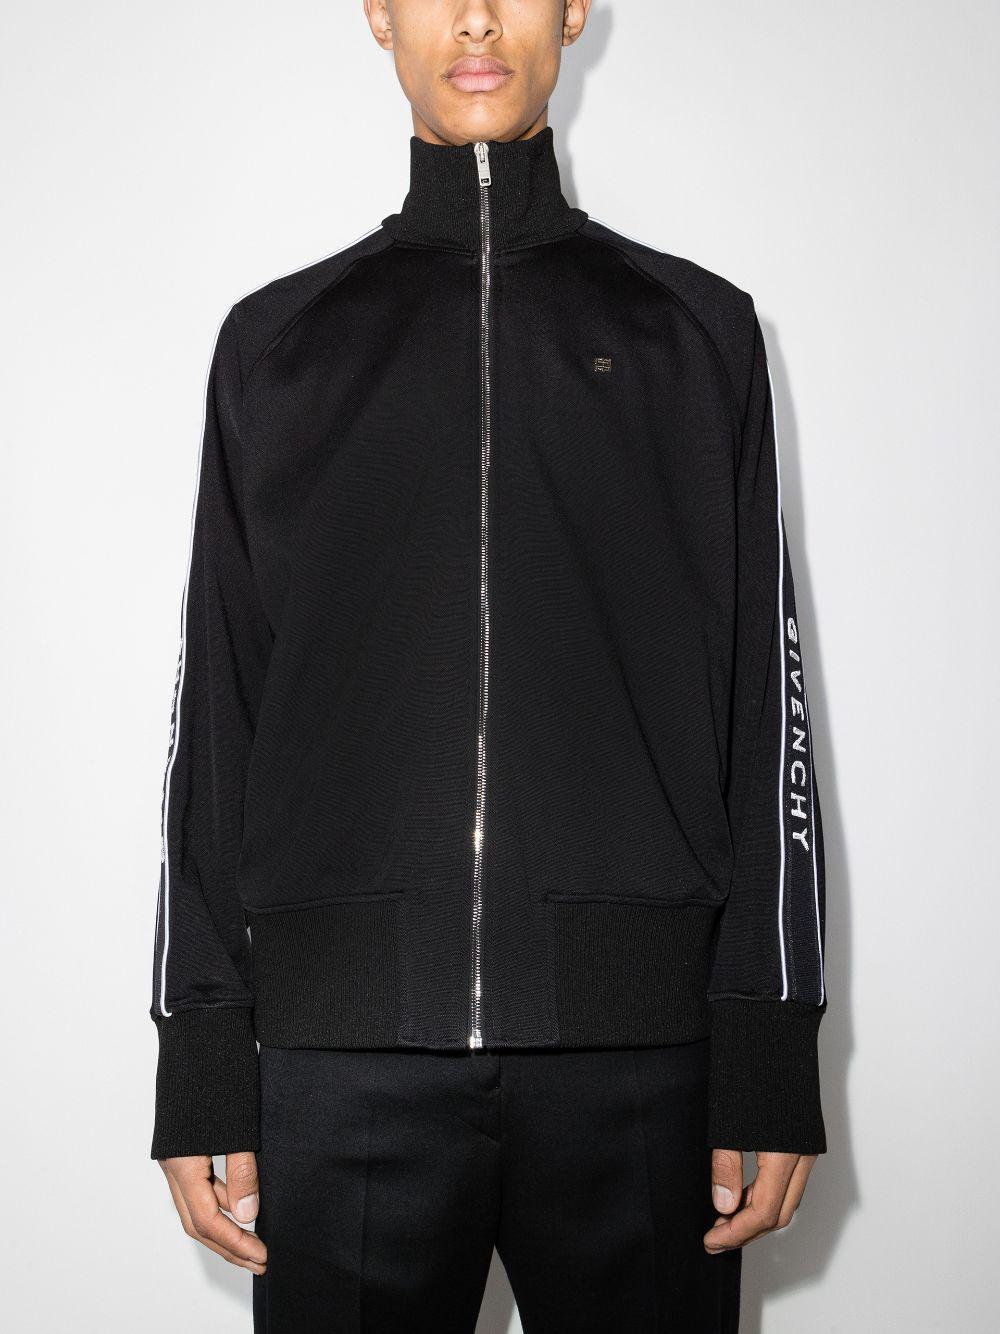 Givenchy Logo-stripe Zip-up Sports Jacket in Black for Men | Lyst